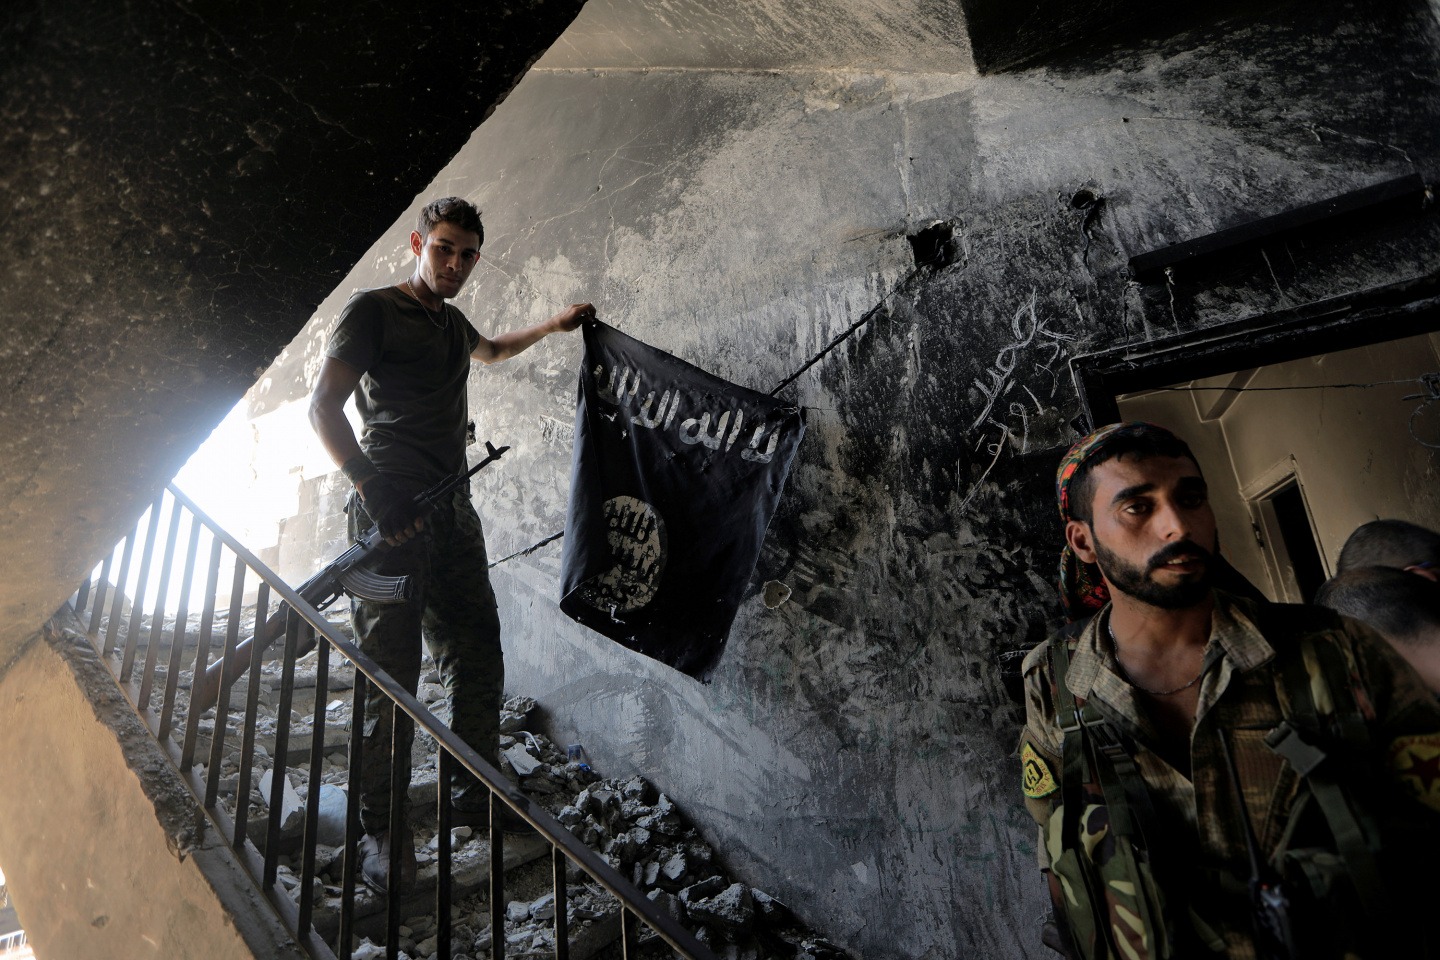 Aλ Μπαγκντάντι: Πώς σκοτώθηκε ο αρχηγός του ISIS – Η διεθνής κοινότητα χαιρετίζει, η Ρωσία ειρωνεύεται